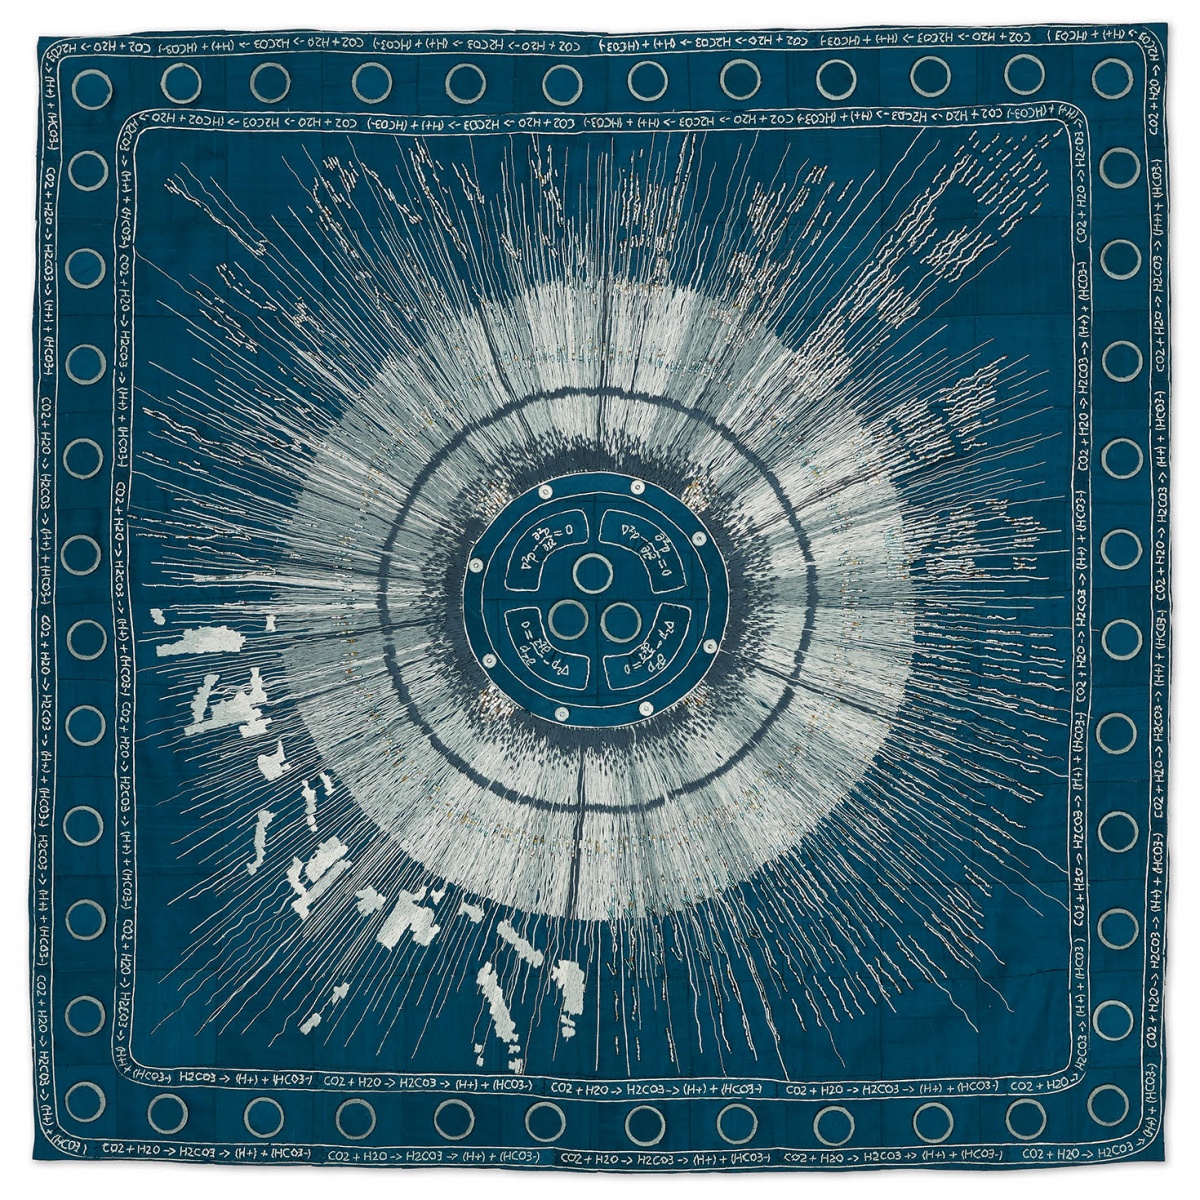 Textile art depicting ocean acoustics.